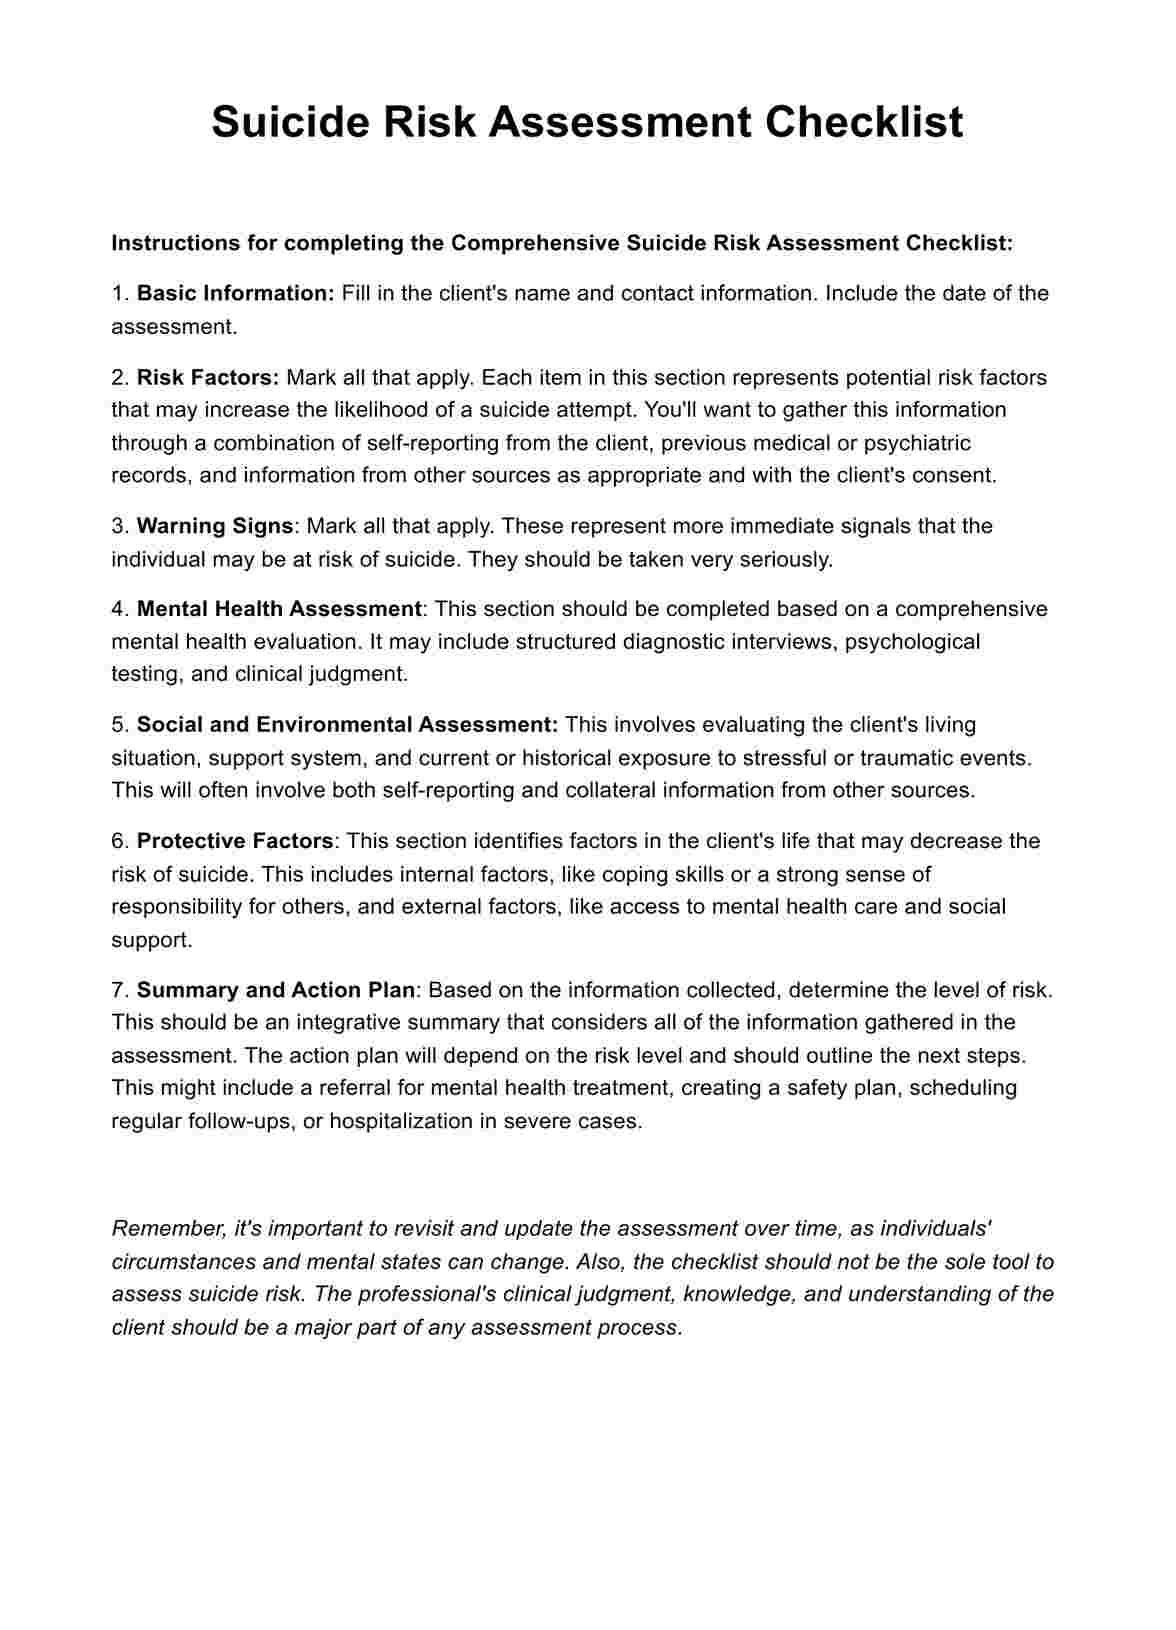 Suicide Assessment Checklist PDF Example